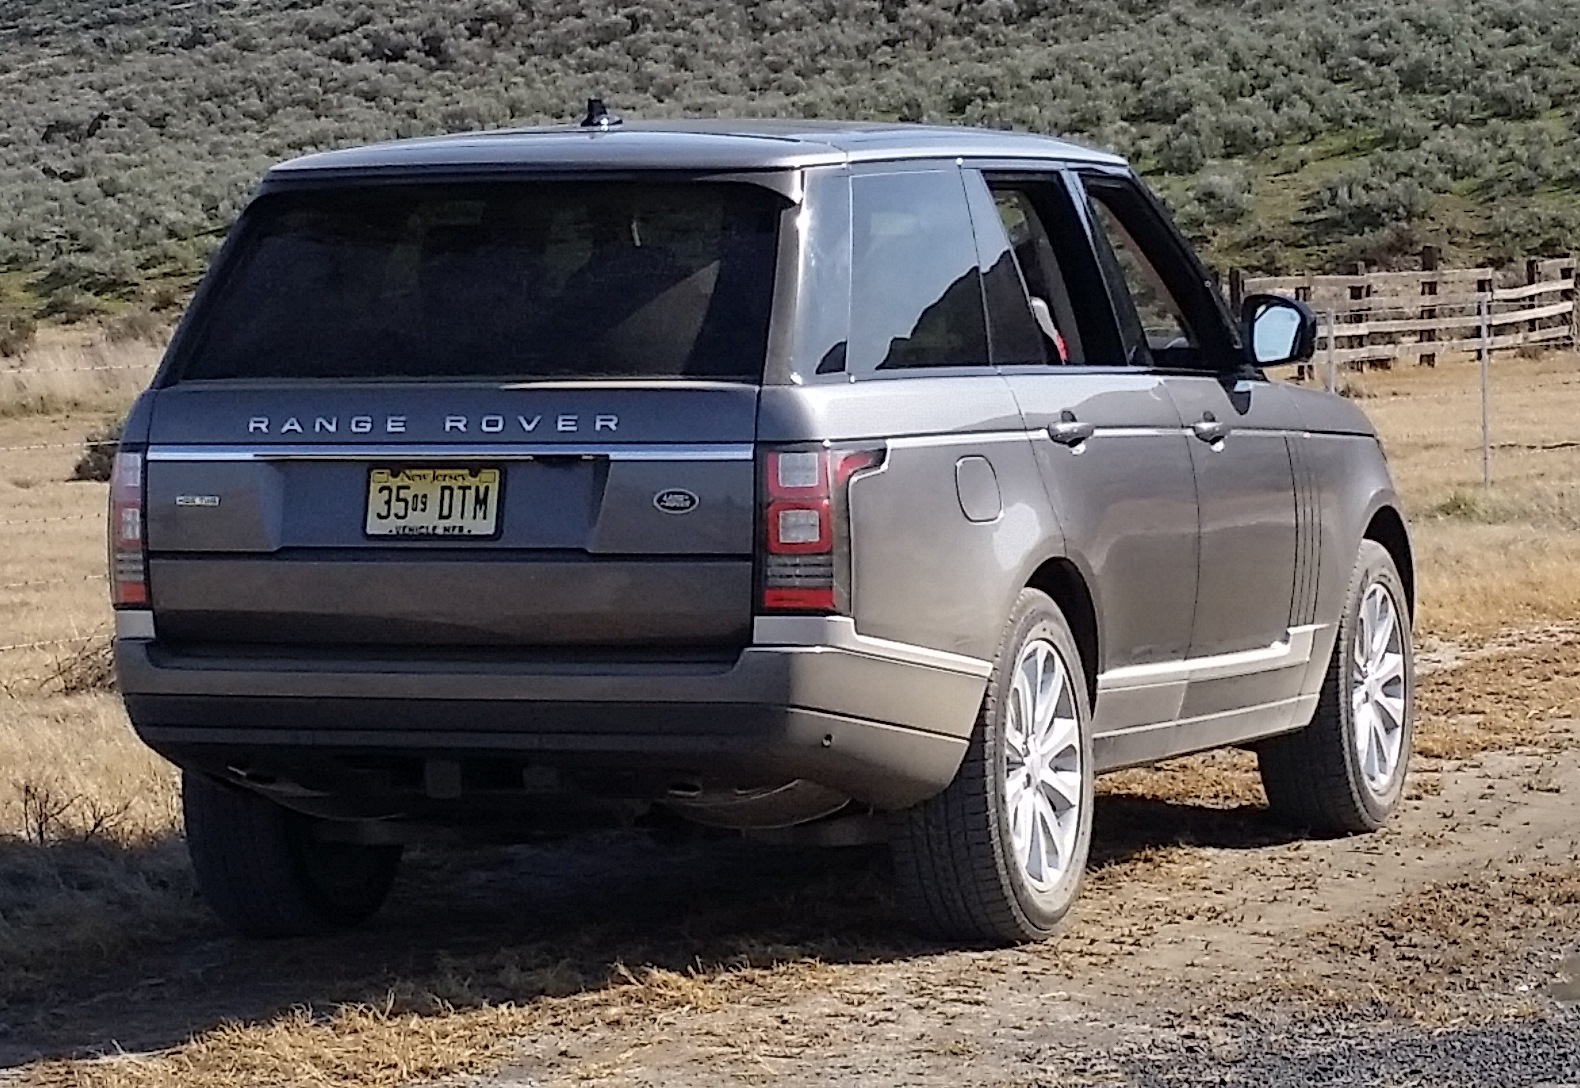 The 2016 Land Rover Range Rover HSE Td6 in Eastern Washington, near Othello.